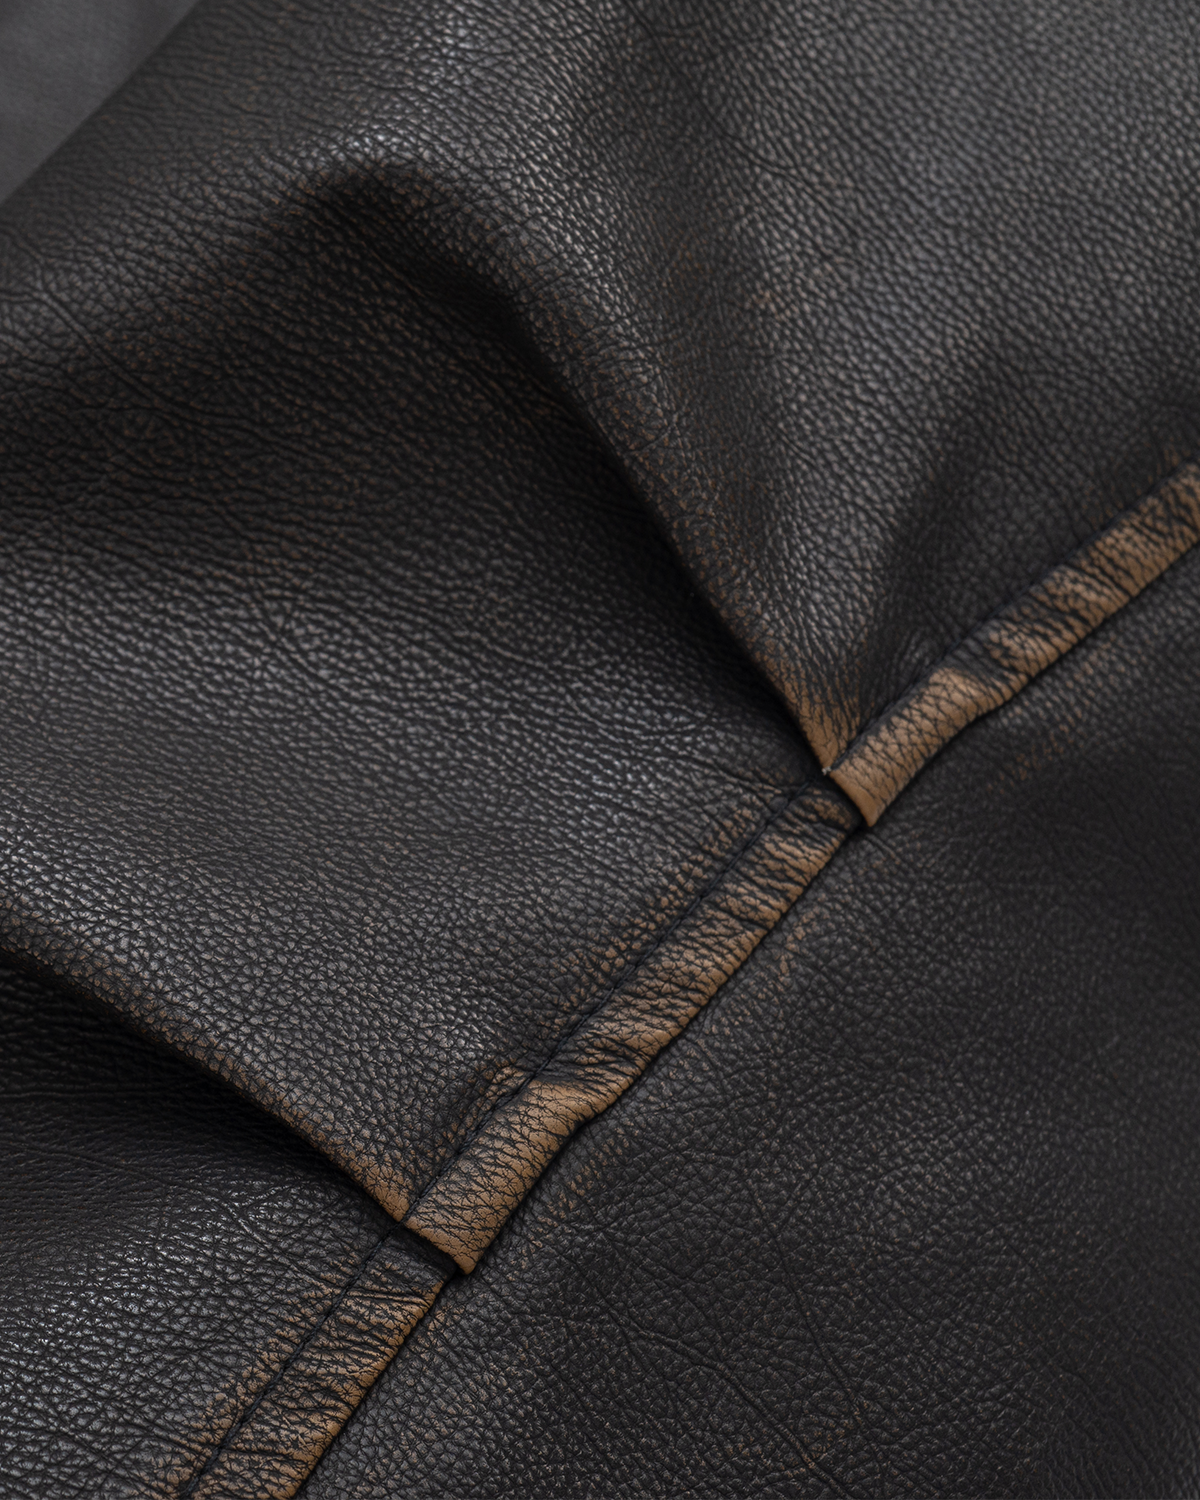 TAKA Original Faded flame Leather Jacket